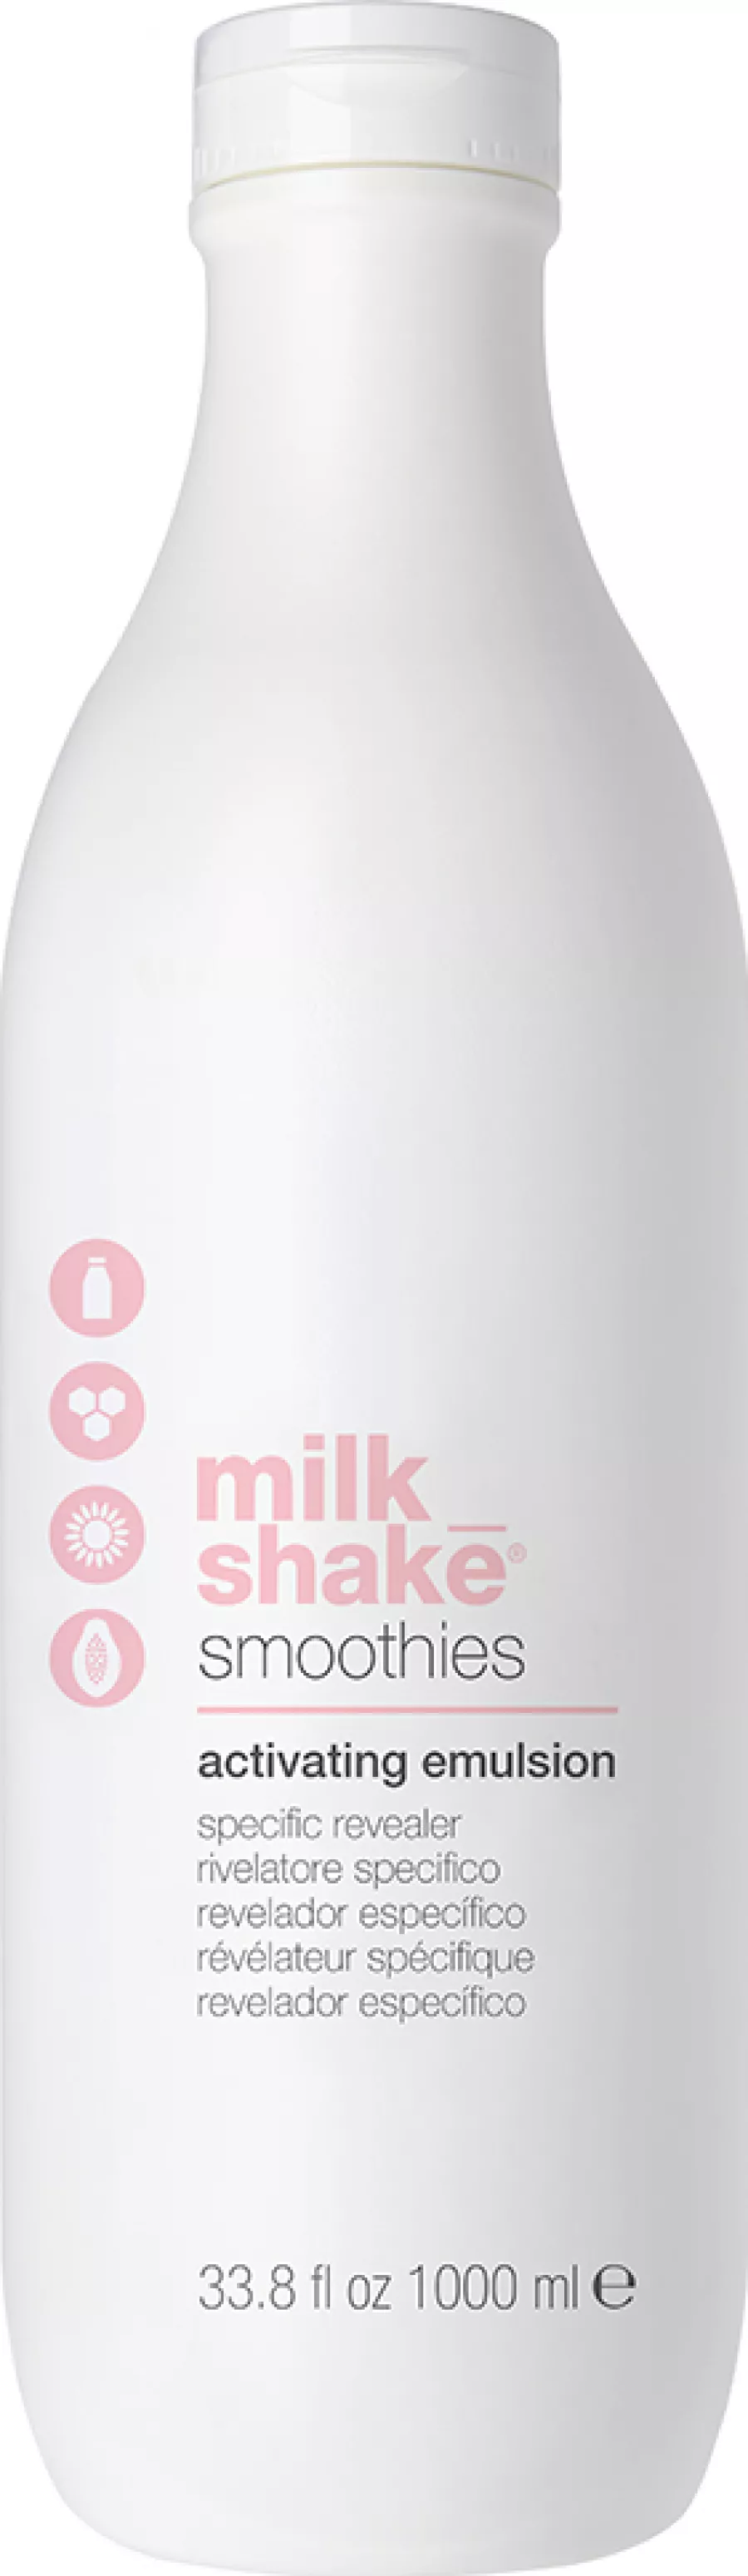 Milkshake smoothies activating emulsion 8 Vol. / 2.4% 950ml